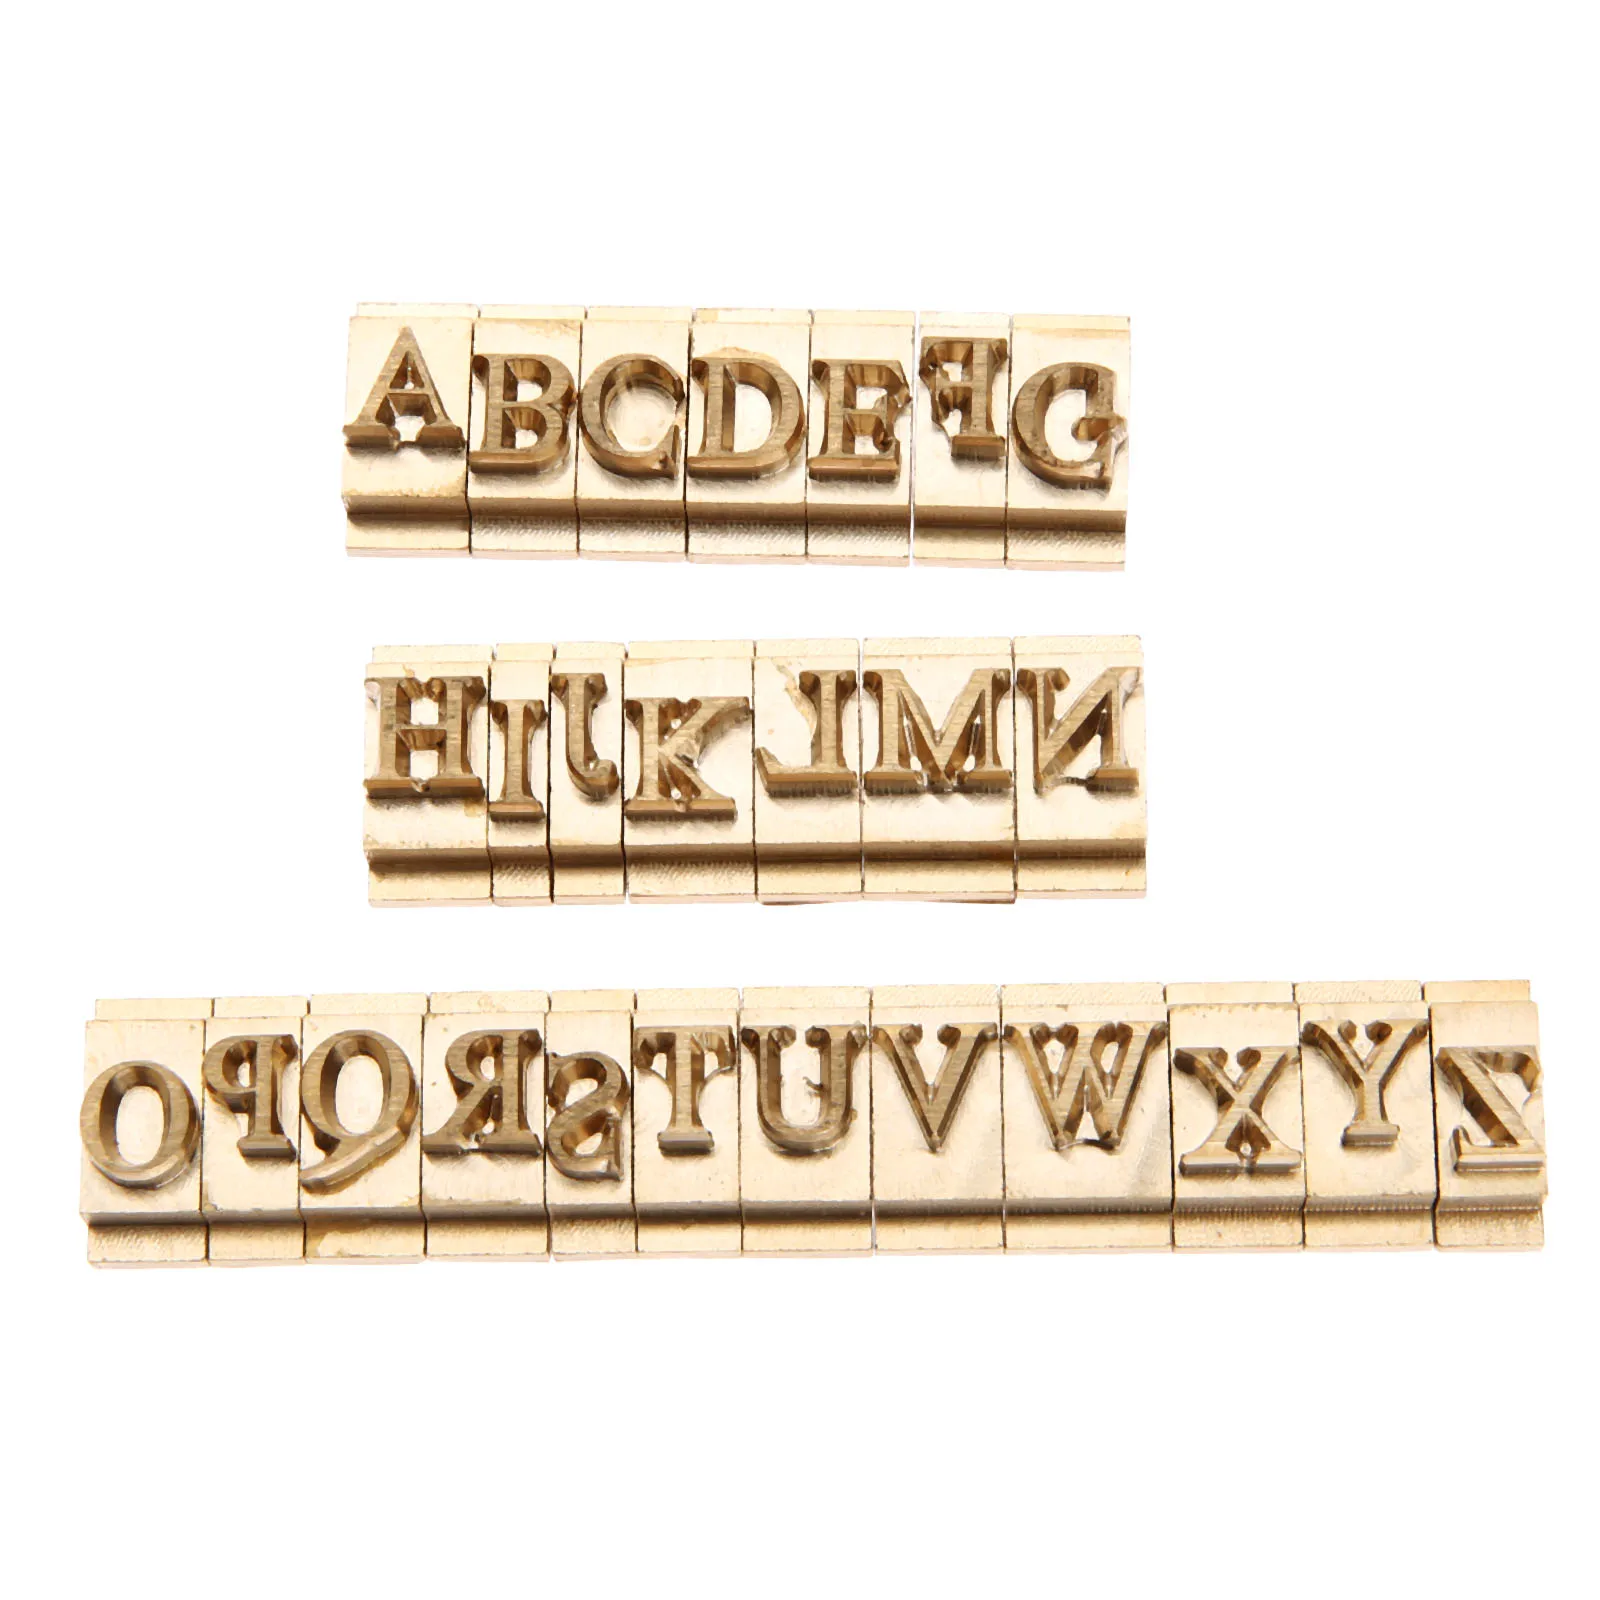 Times New Roman Gold Alphabet Stock Illustration - Illustration of